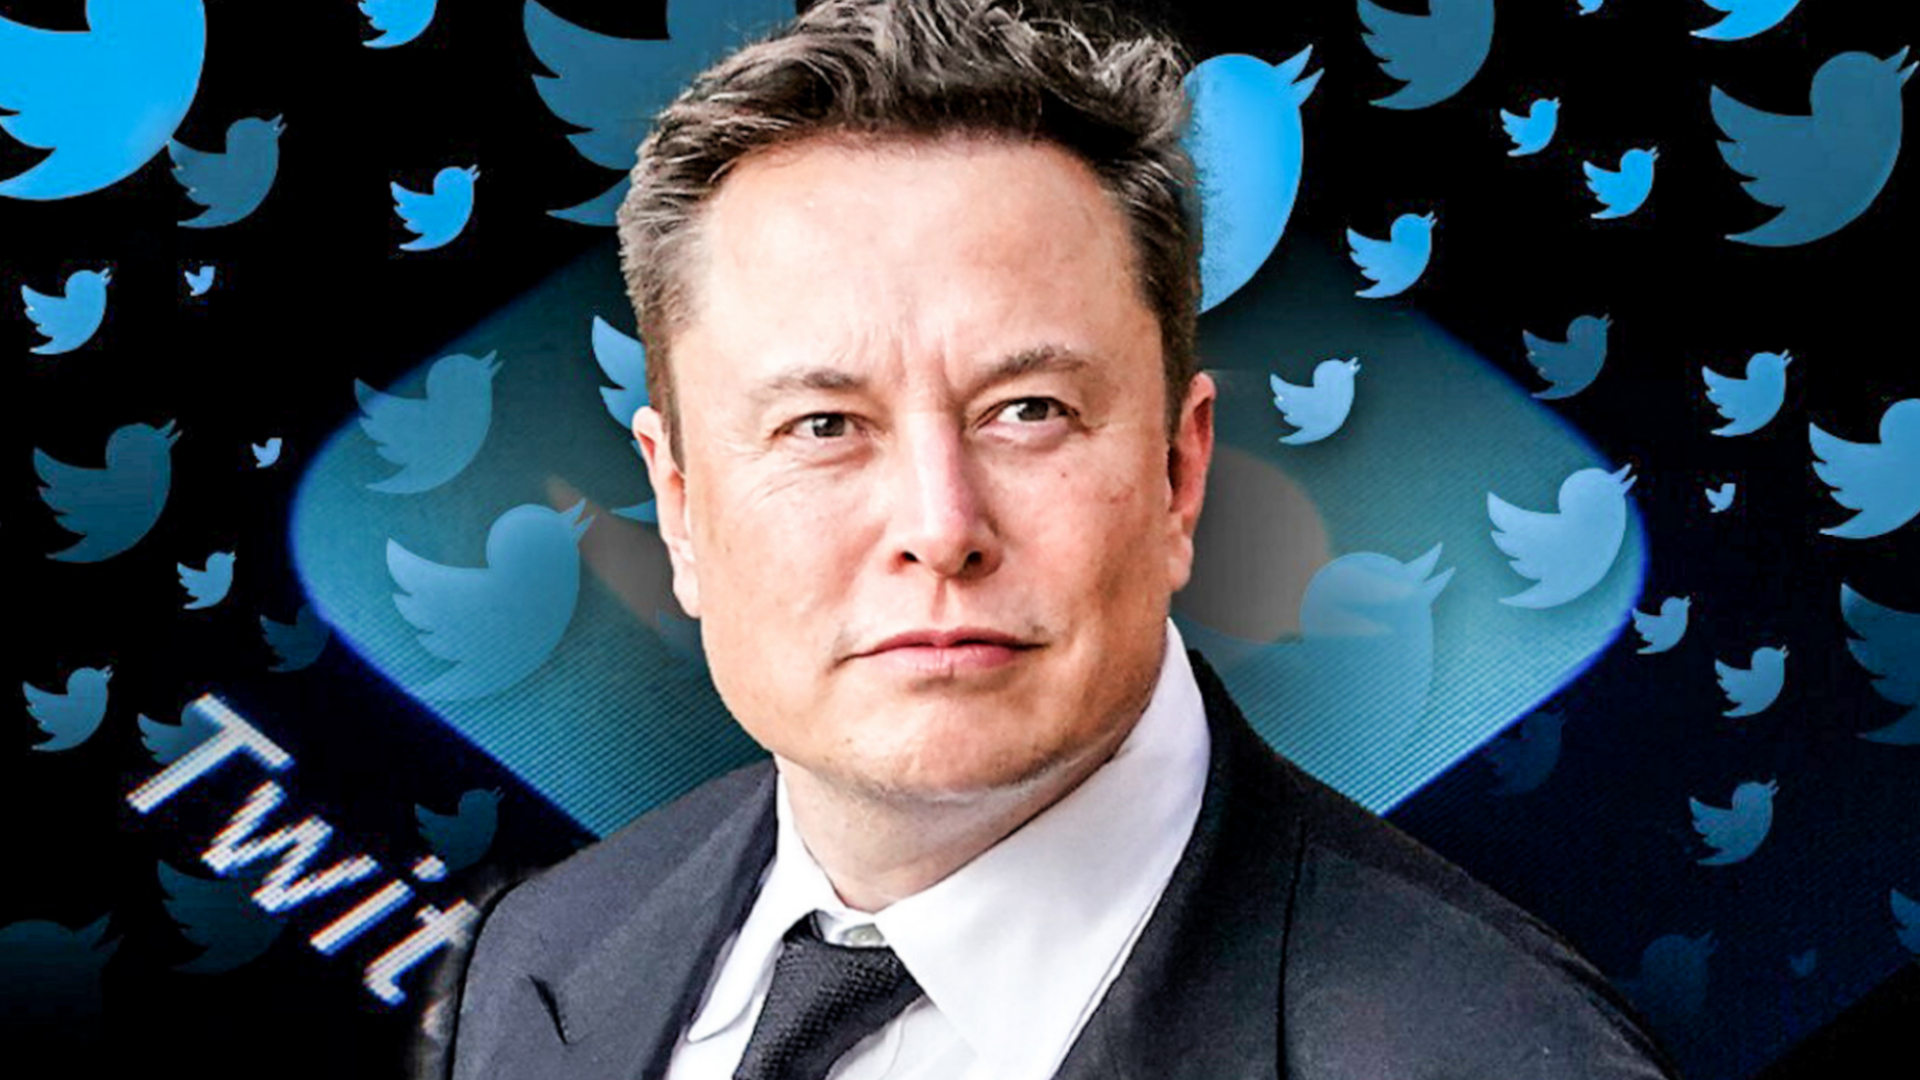 Elon Musk's most interesting tweets of 2022